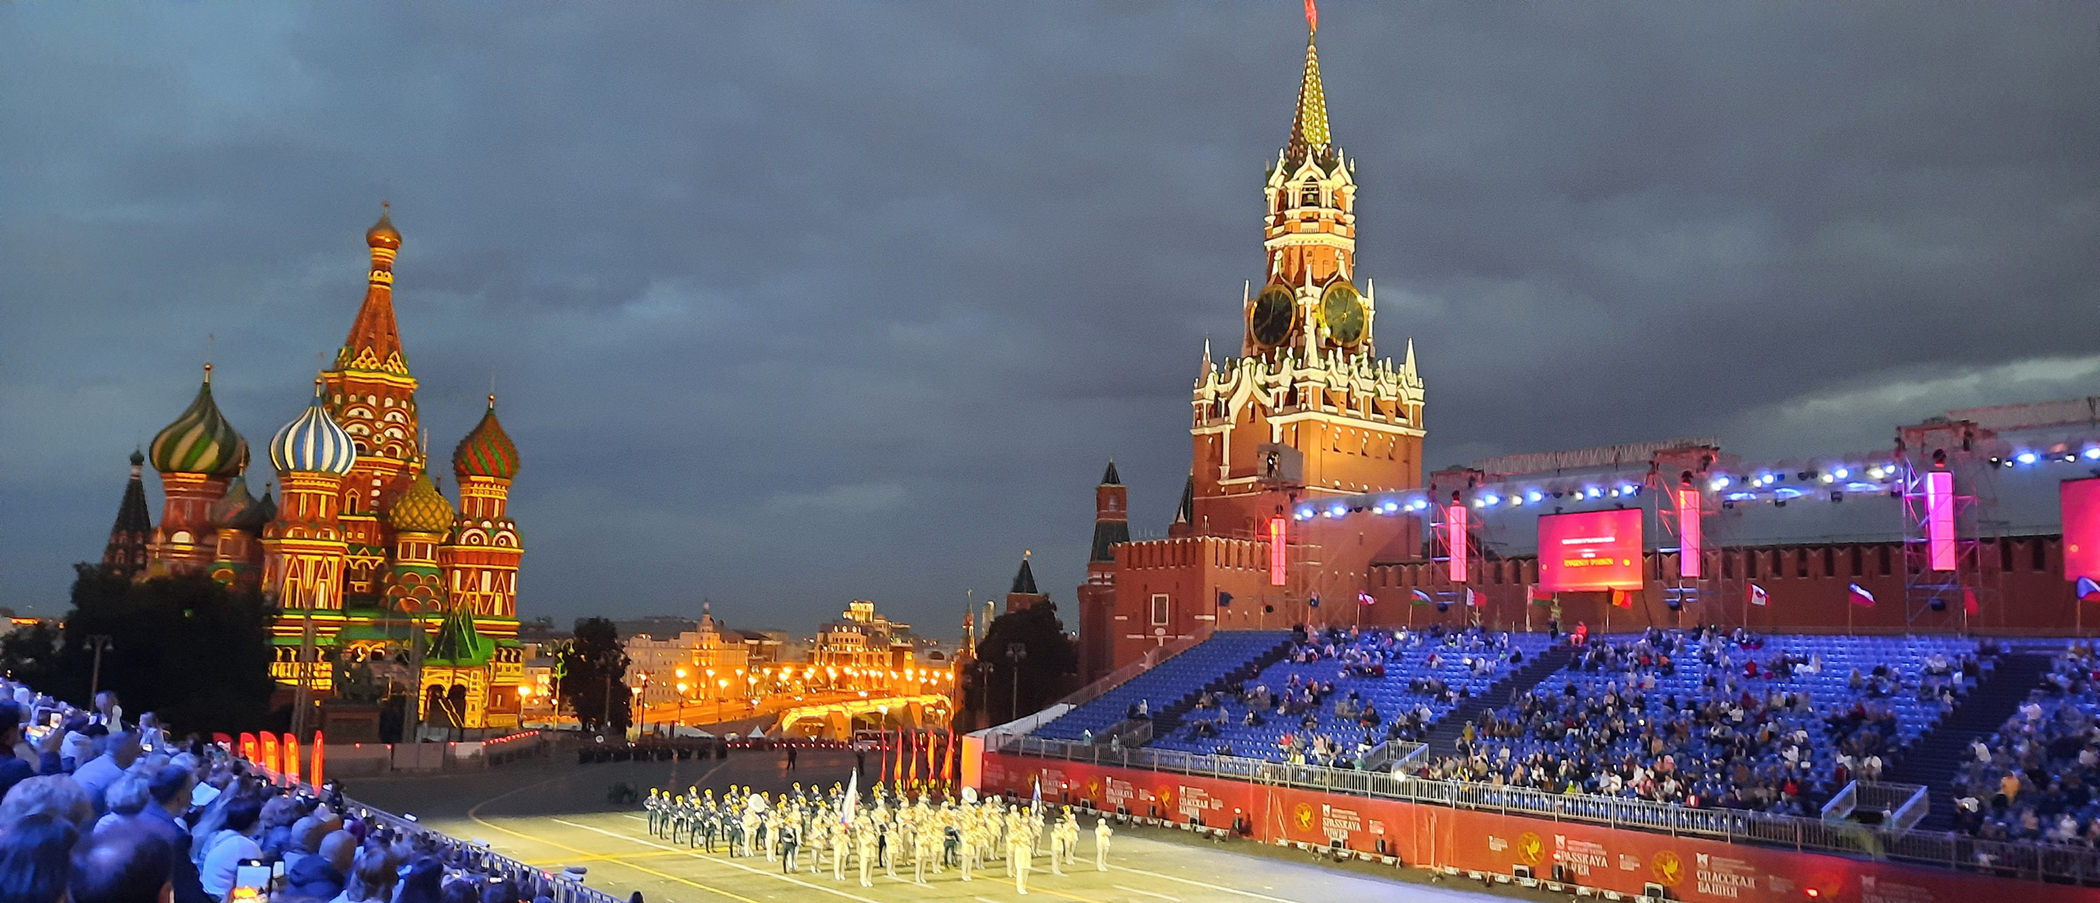 Festival Spasskaya de Moscú de música militar en la Plaza Roja